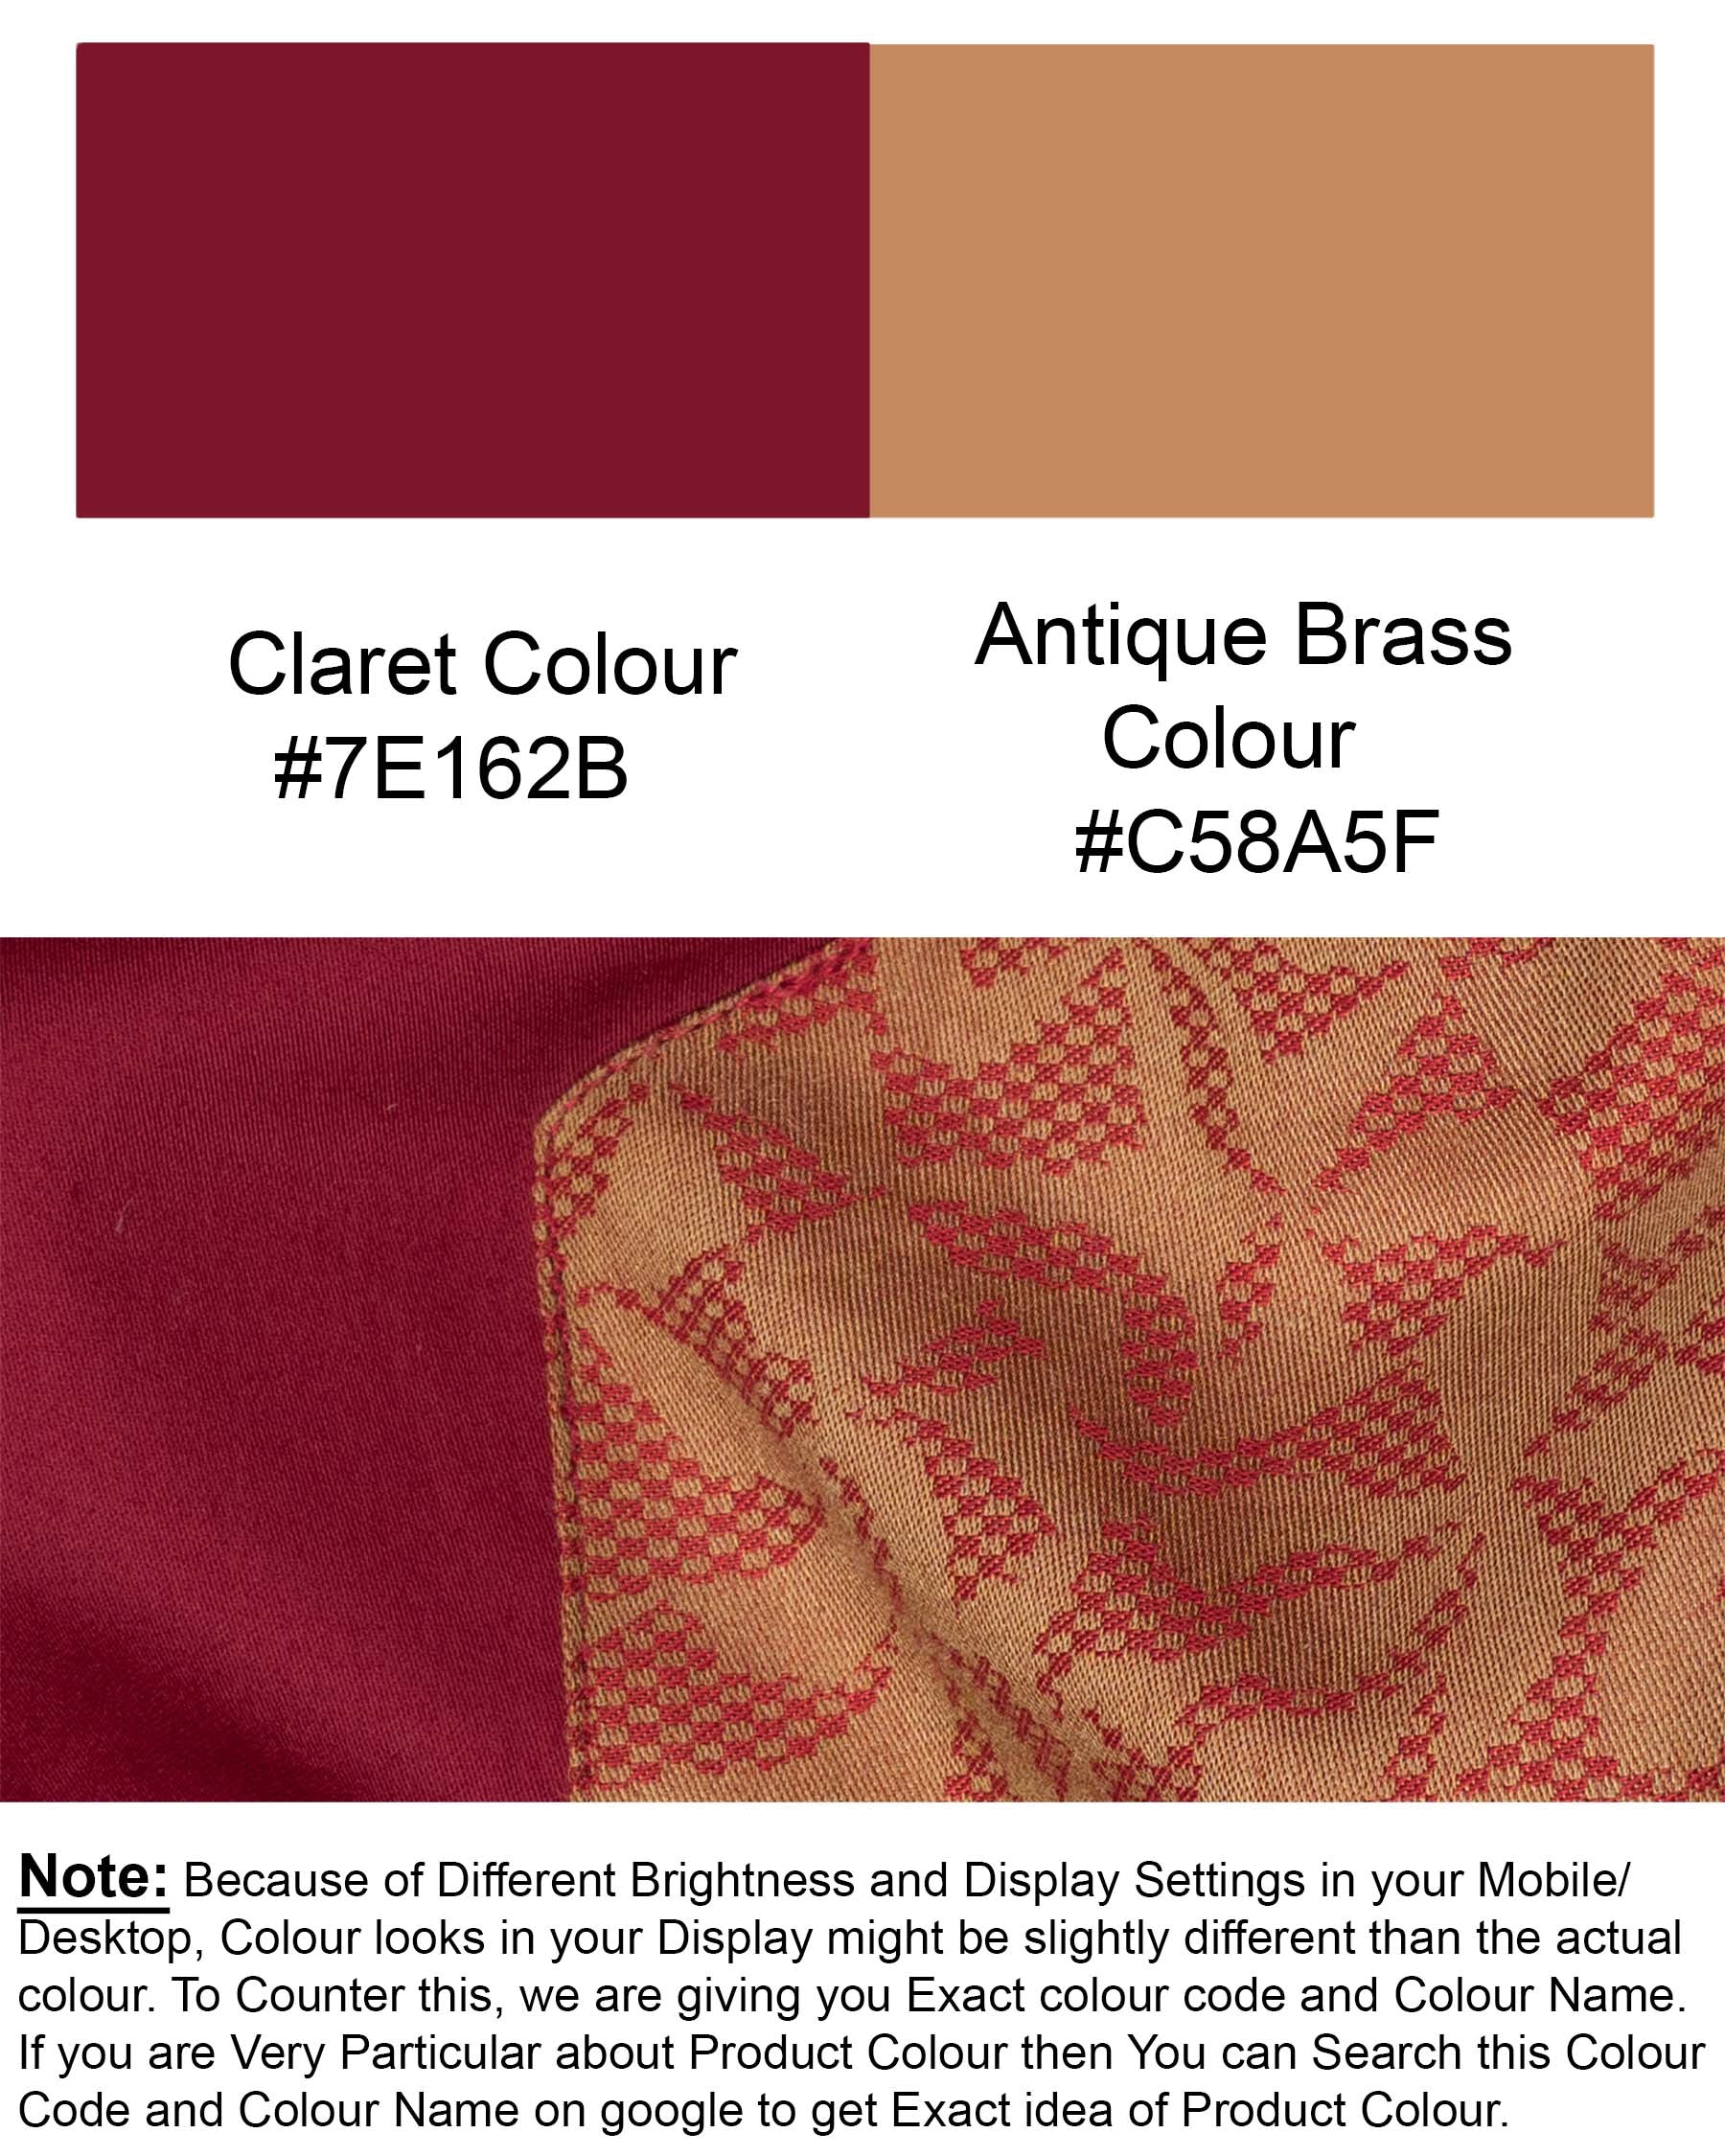 Claret Red with Antique Brass Super Soft Premium Cotton Designer Shirt 6942-P138-38,6942-P138-H-38,6942-P138-39,6942-P138-H-39,6942-P138-40,6942-P138-H-40,6942-P138-42,6942-P138-H-42,6942-P138-44,6942-P138-H-44,6942-P138-46,6942-P138-H-46,6942-P138-48,6942-P138-H-48,6942-P138-50,6942-P138-H-50,6942-P138-52,6942-P138-H-52